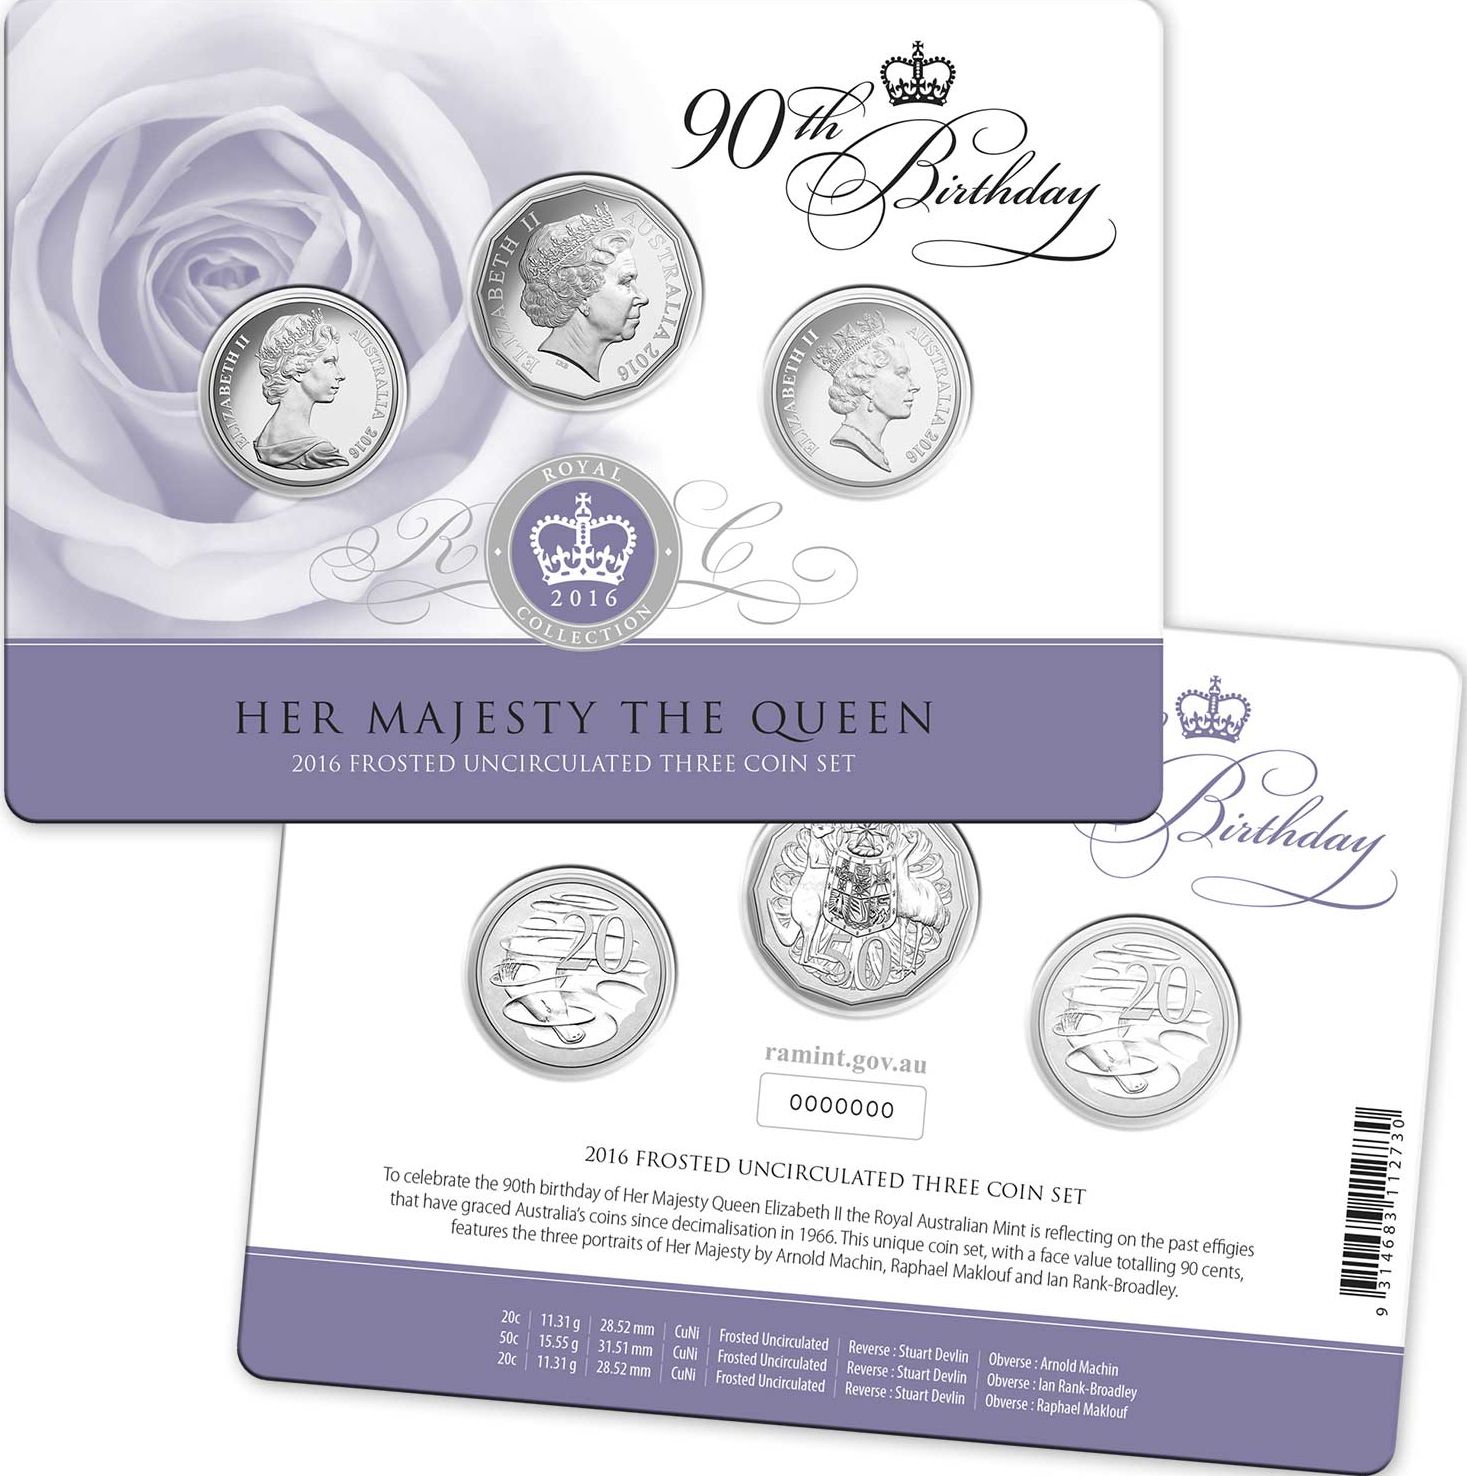 Queen's Birthday Commemorative 3 Coin Set (image courtesy ramint.gov.au)